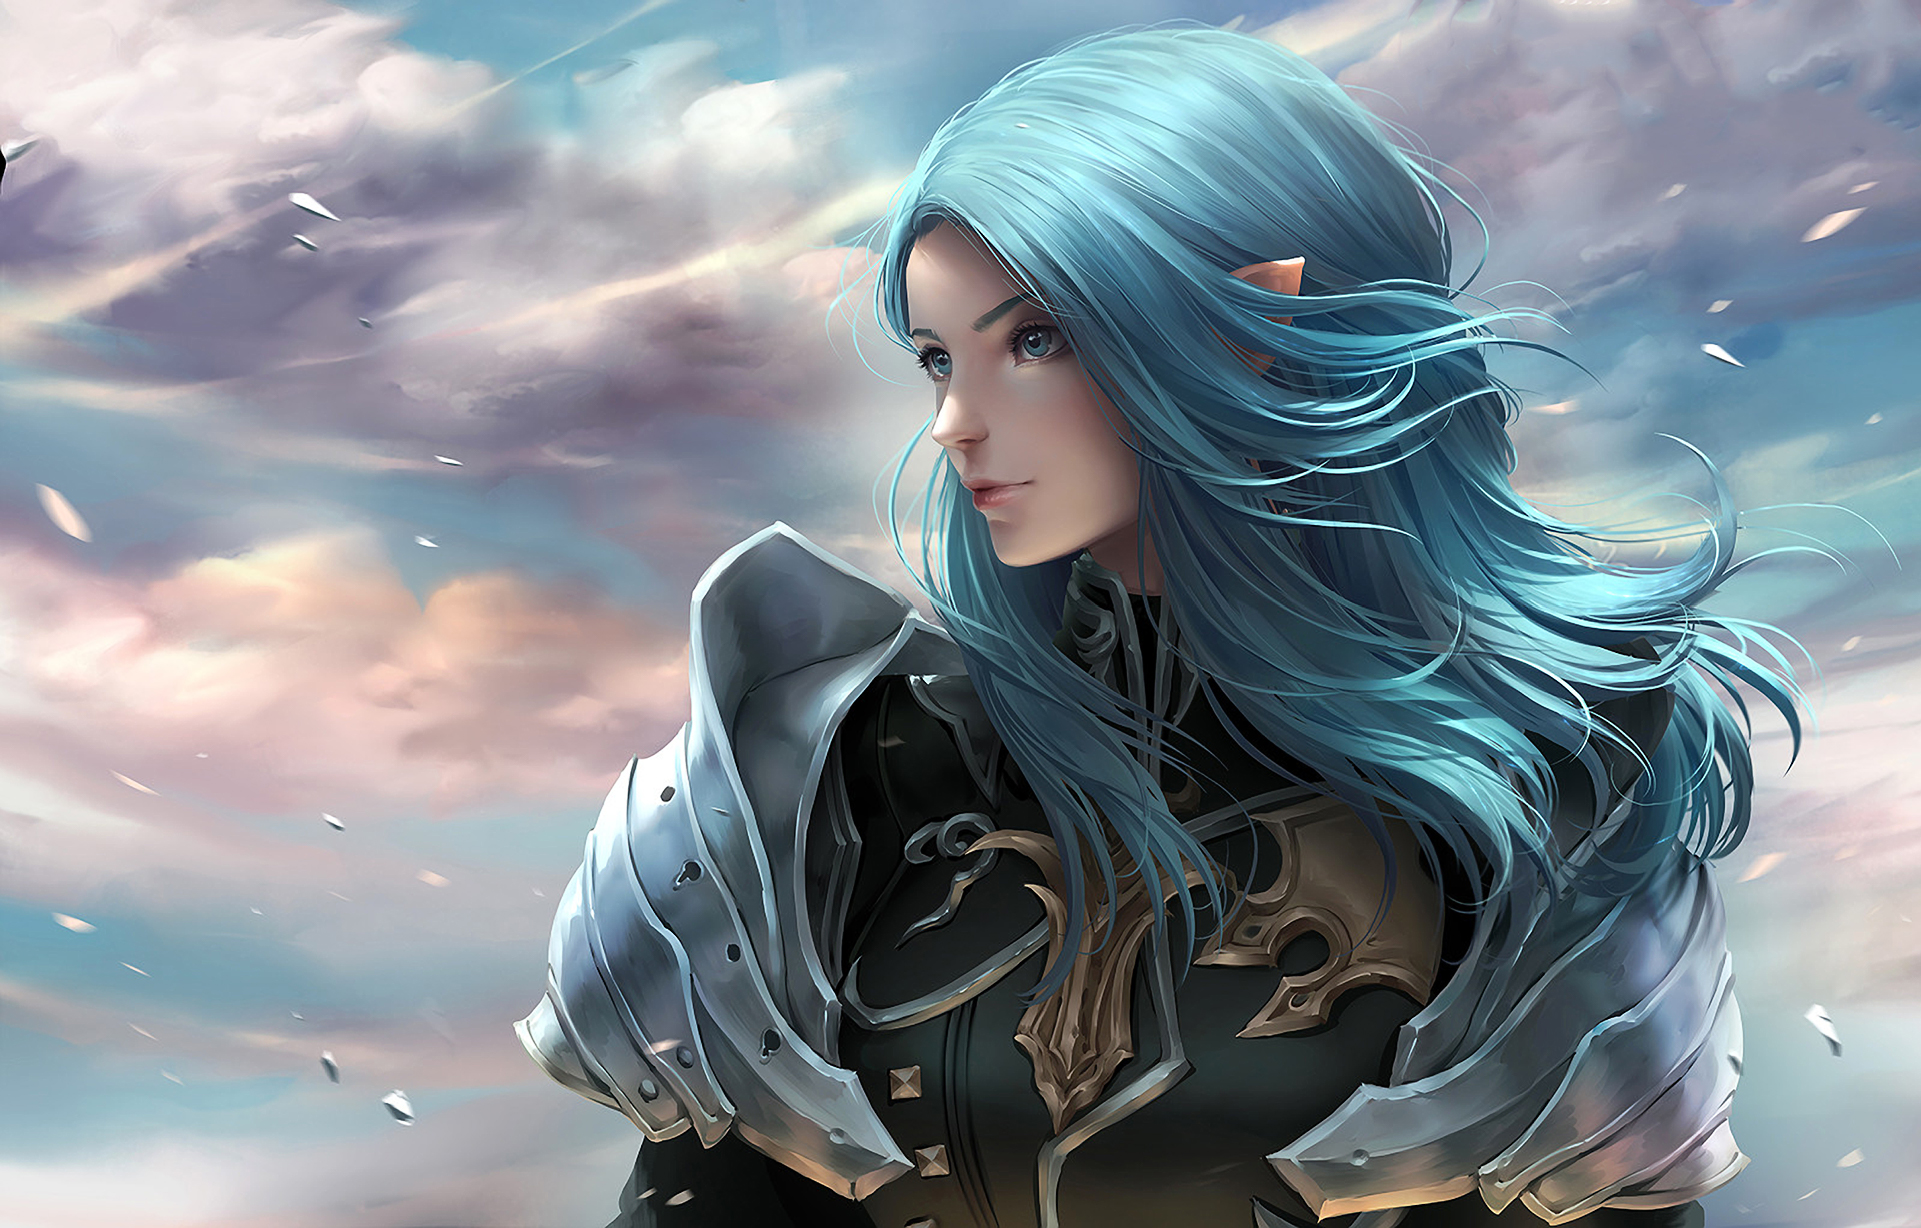 Descarga gratuita de fondo de pantalla para móvil de Final Fantasy Xiv: Un Reino Renacido, Fainaru Fantajî, Videojuego.